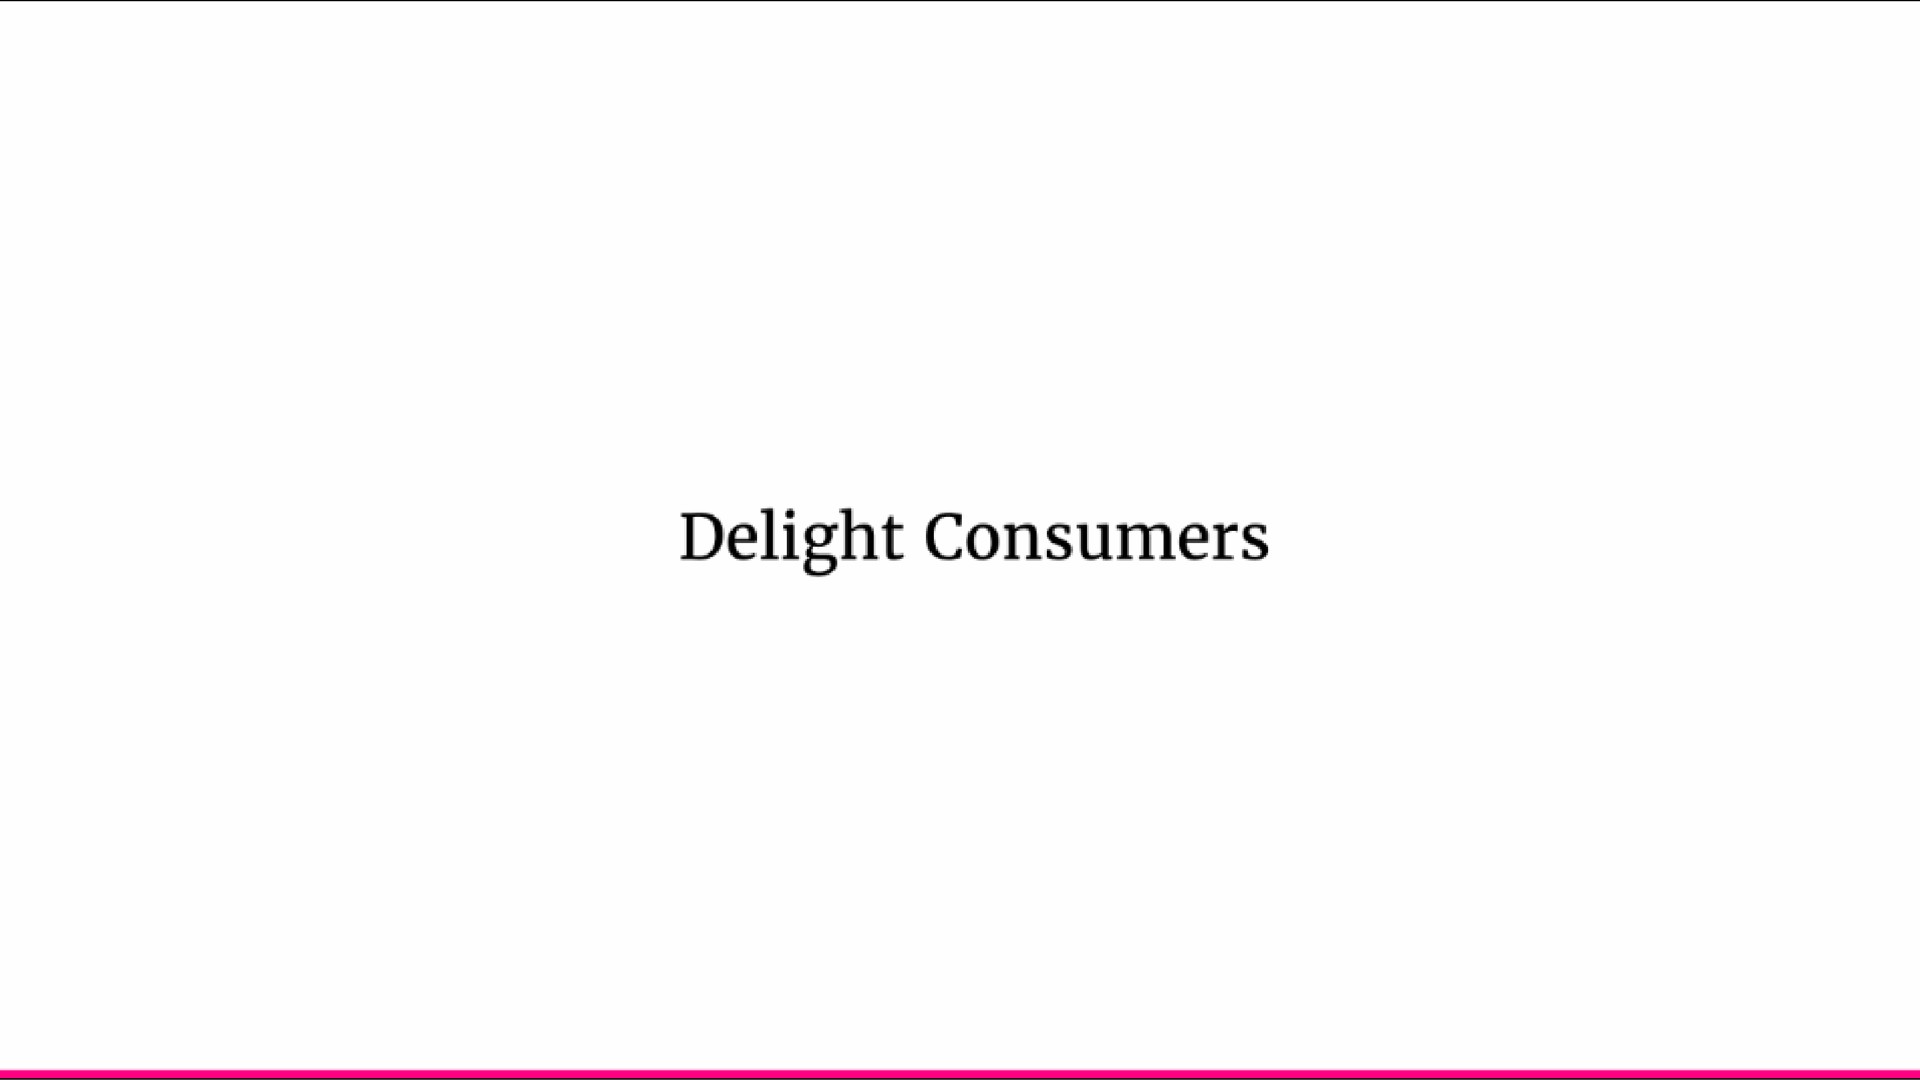 delight consumers | Lemonade